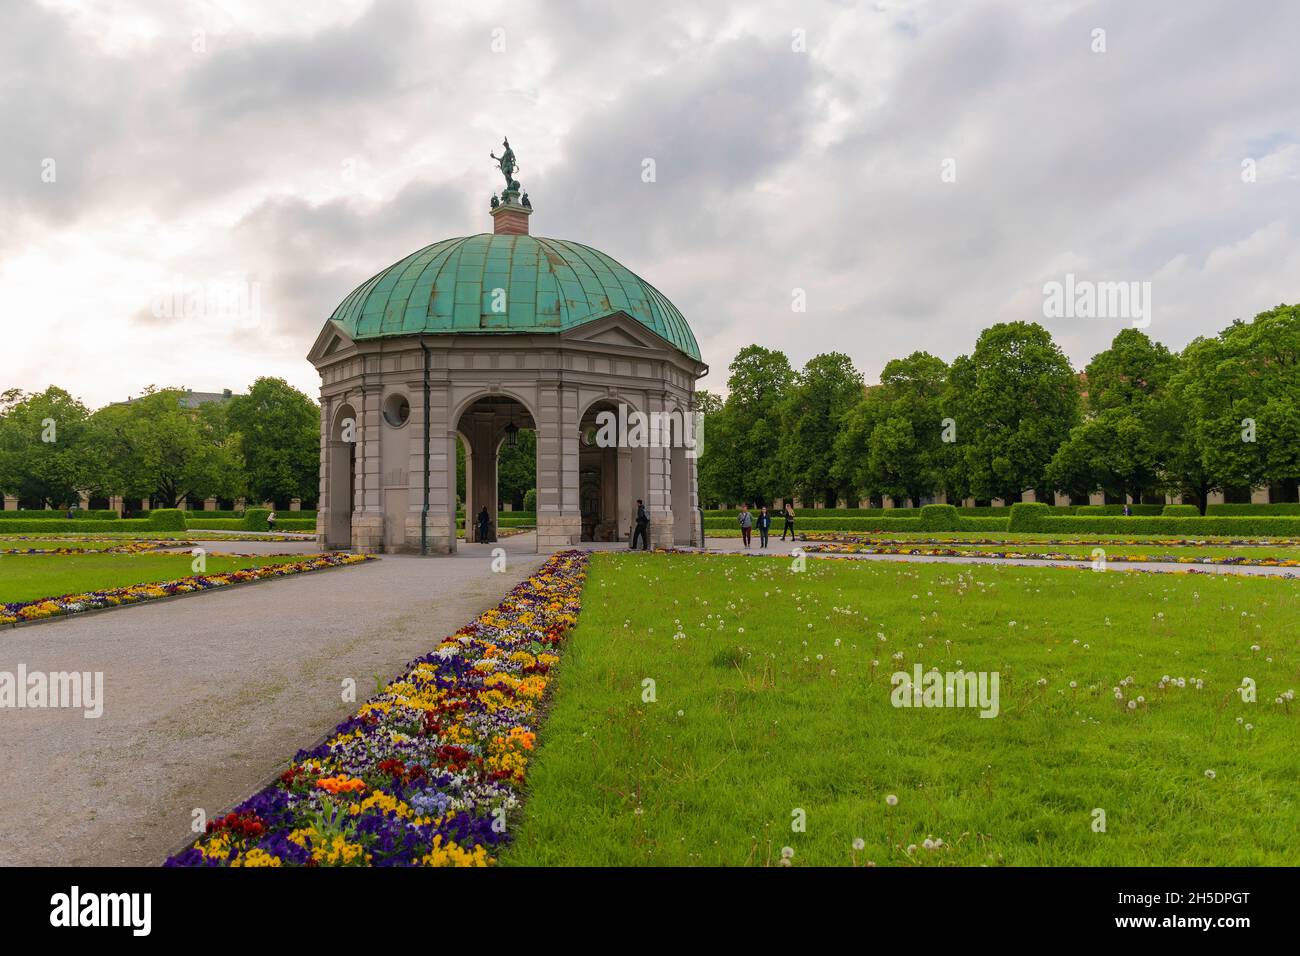 Diana Temple (Dianatempel) rotonda in English garden near Munich Residence Palace Stock Photo